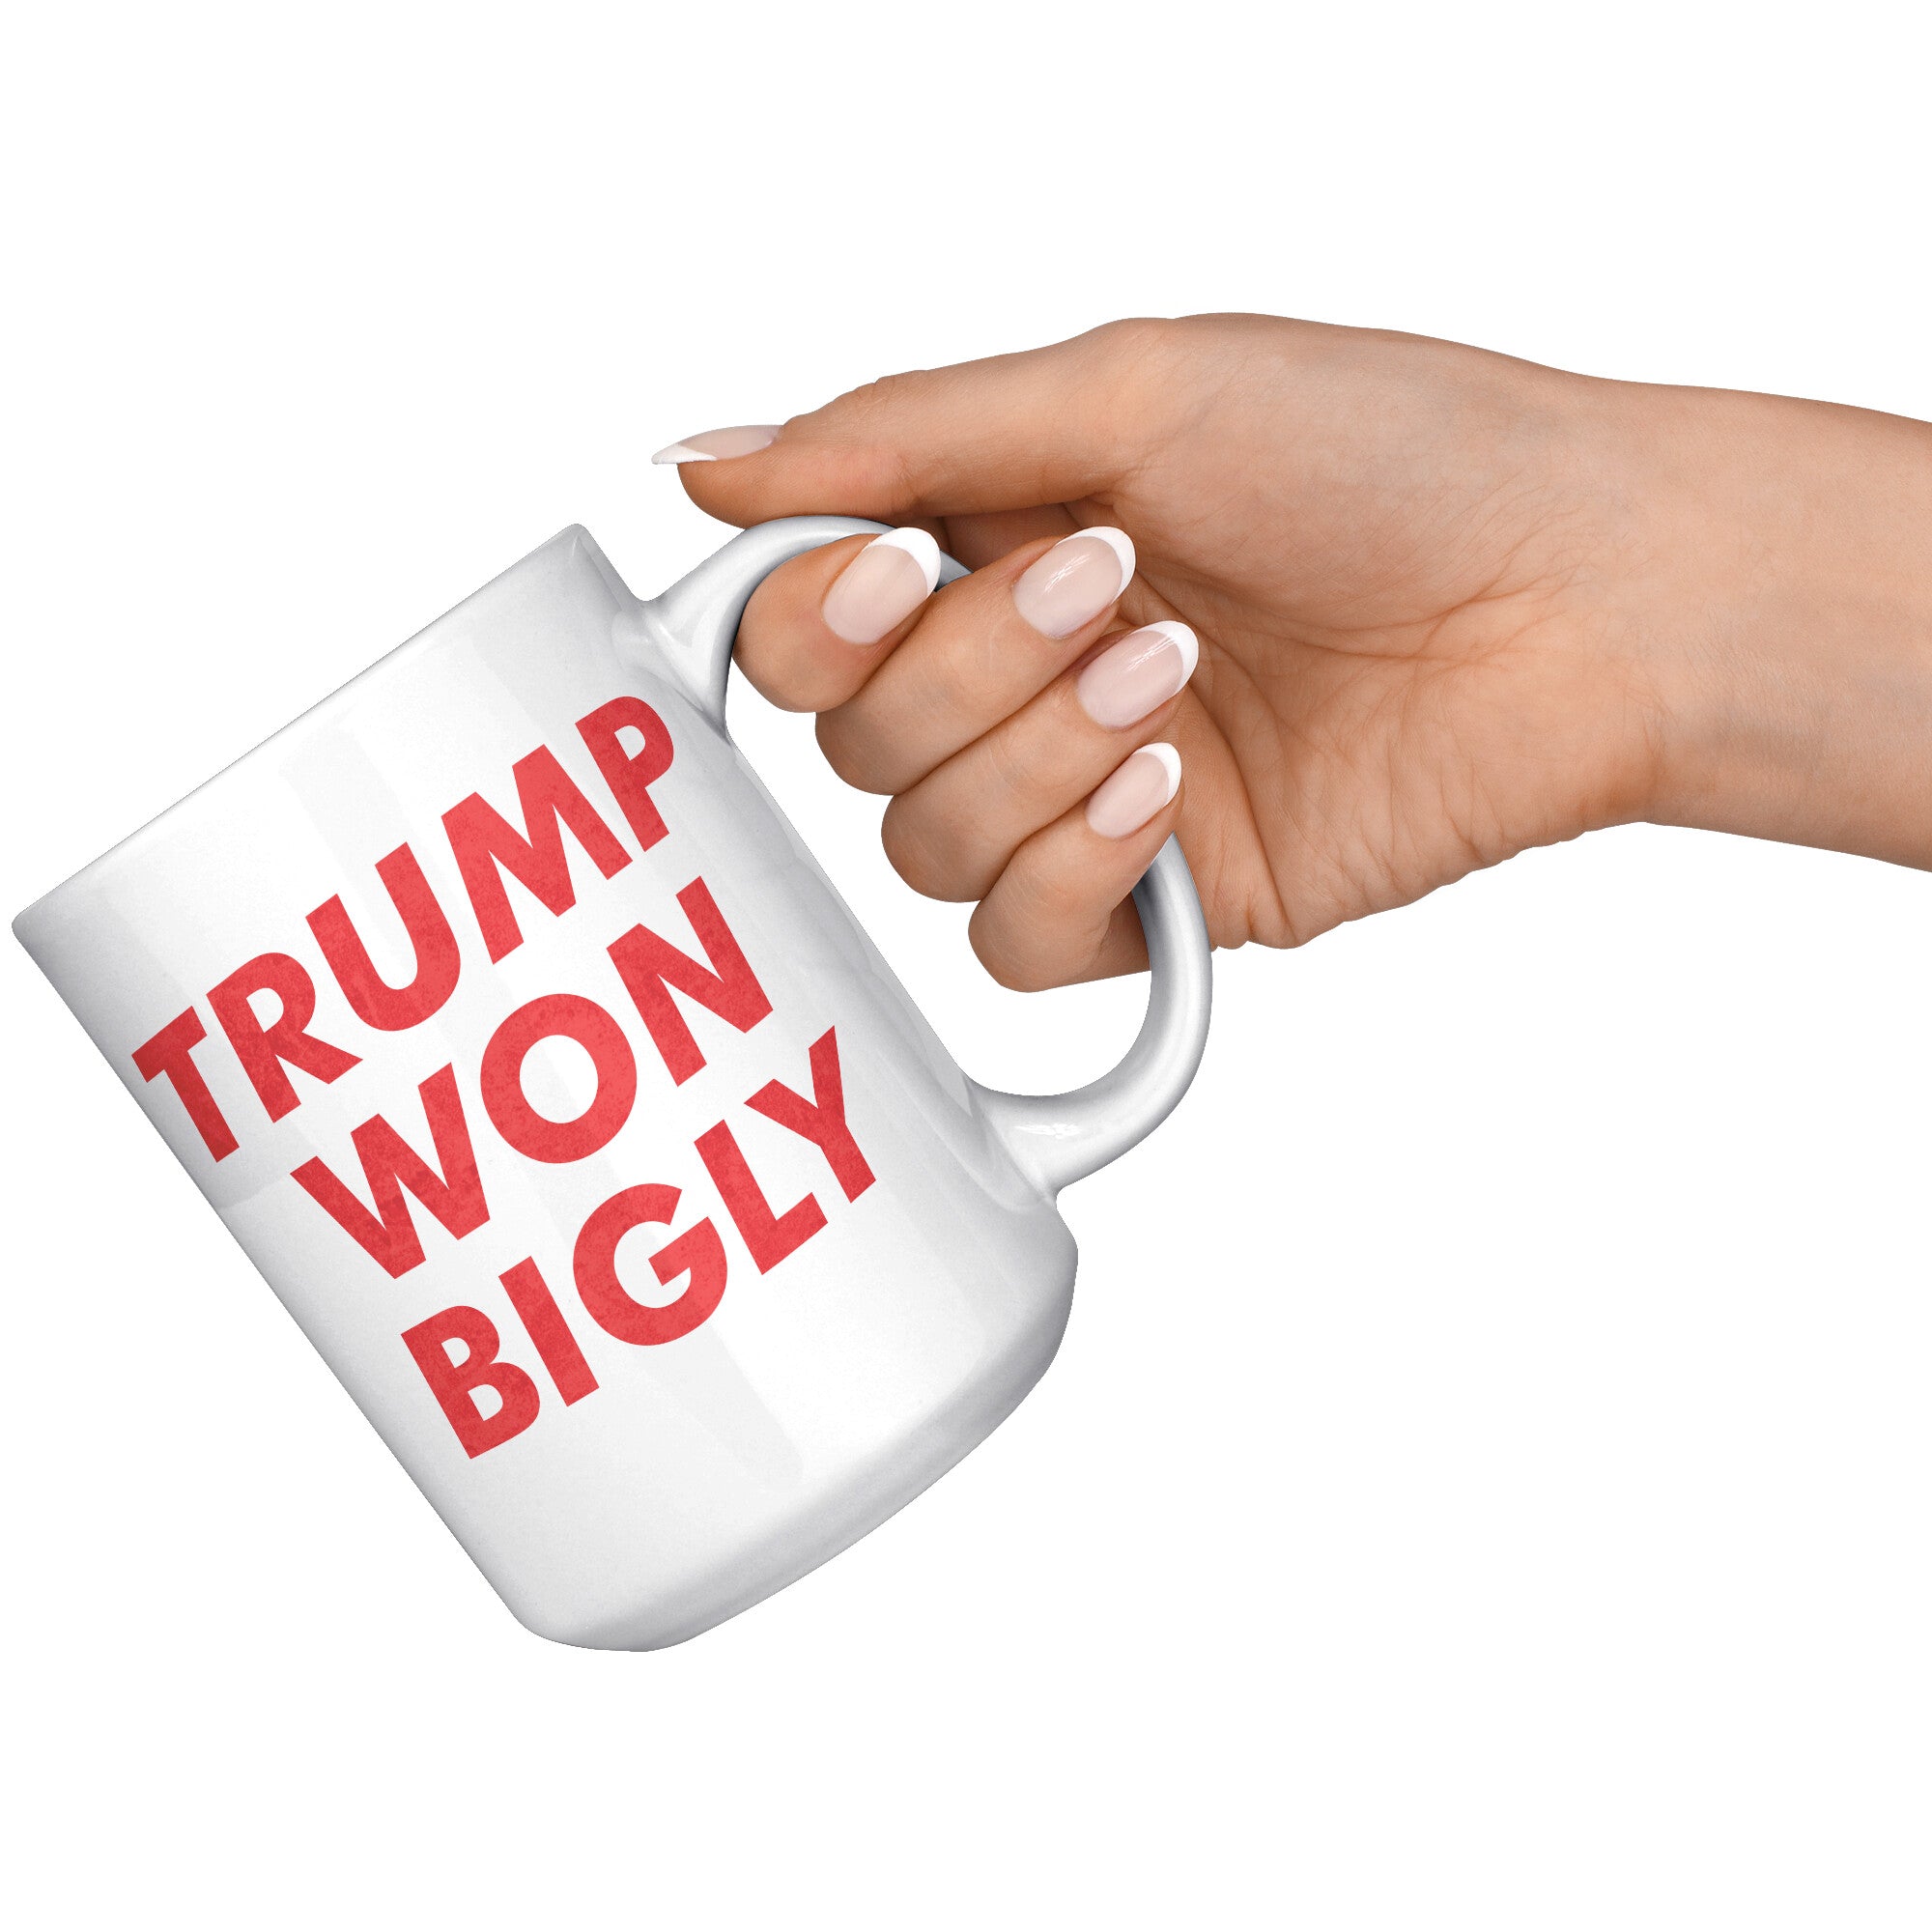 Trump Won Bigly Coffee Mug -Ceramic Mugs | Drunk America 